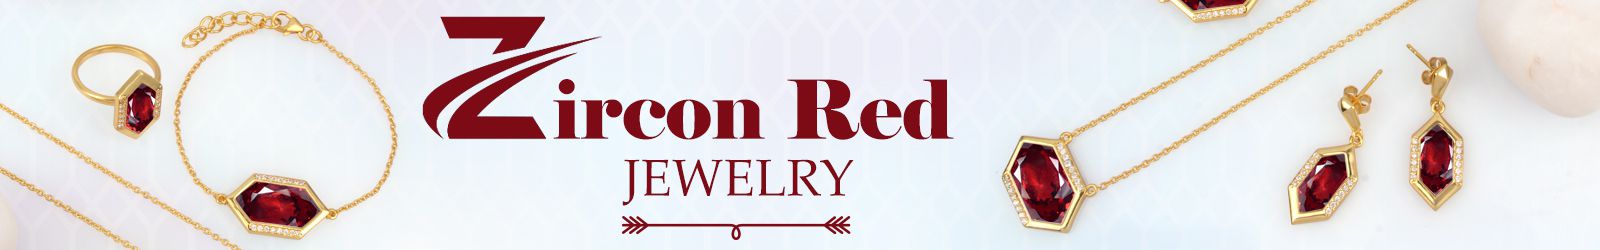 Silver Zircon Red Jewelry Wholesale Supplier